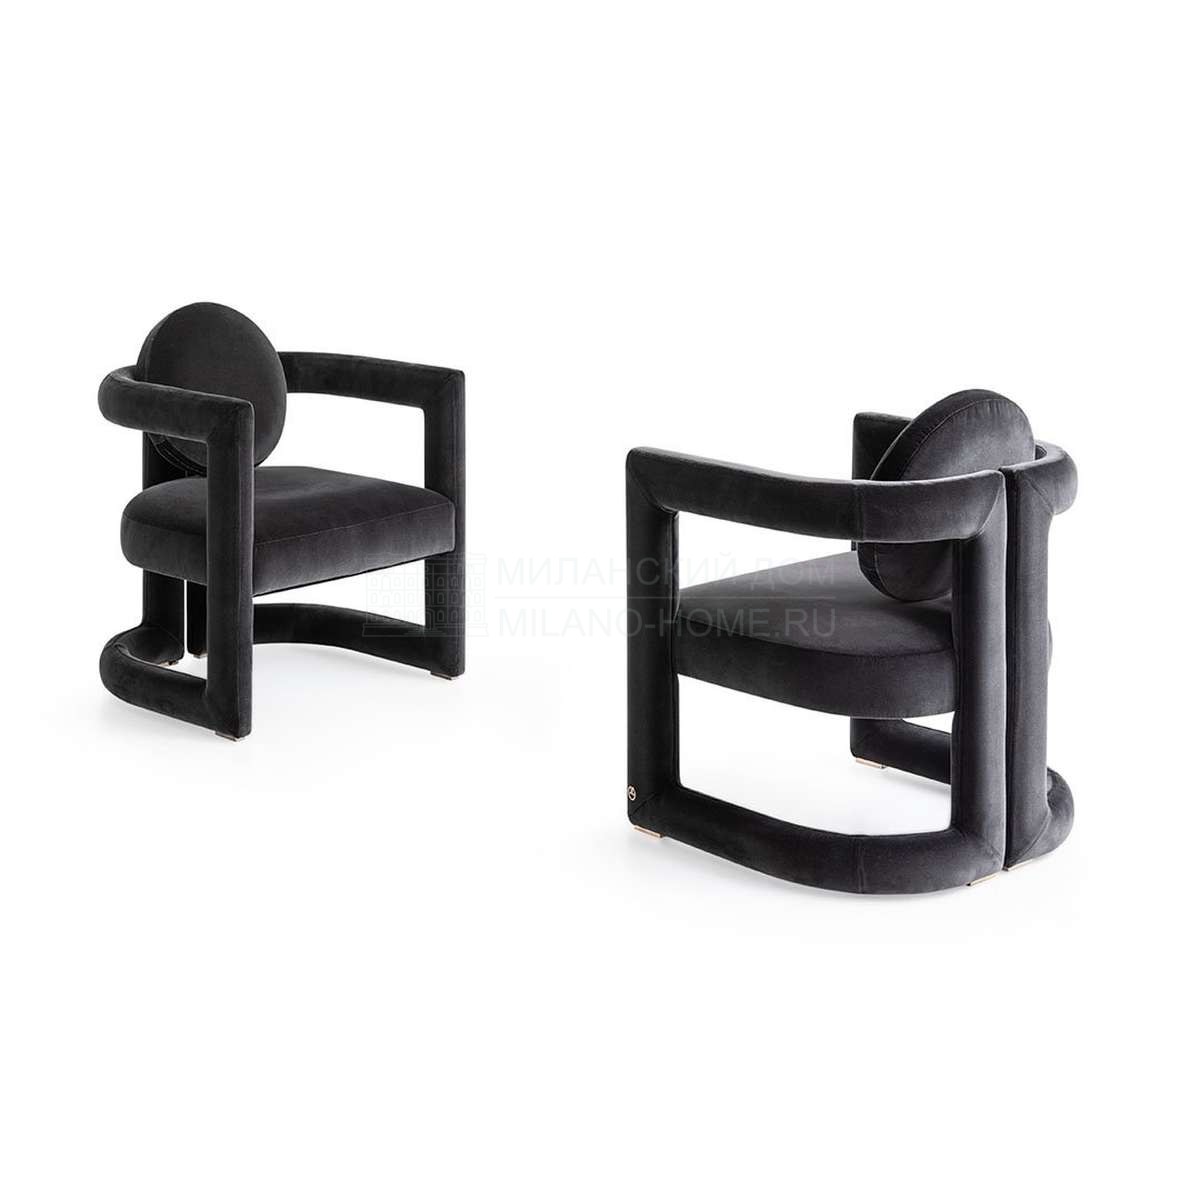 Круглое кресло Avenue armchair  из Италии фабрики FENDI Casa